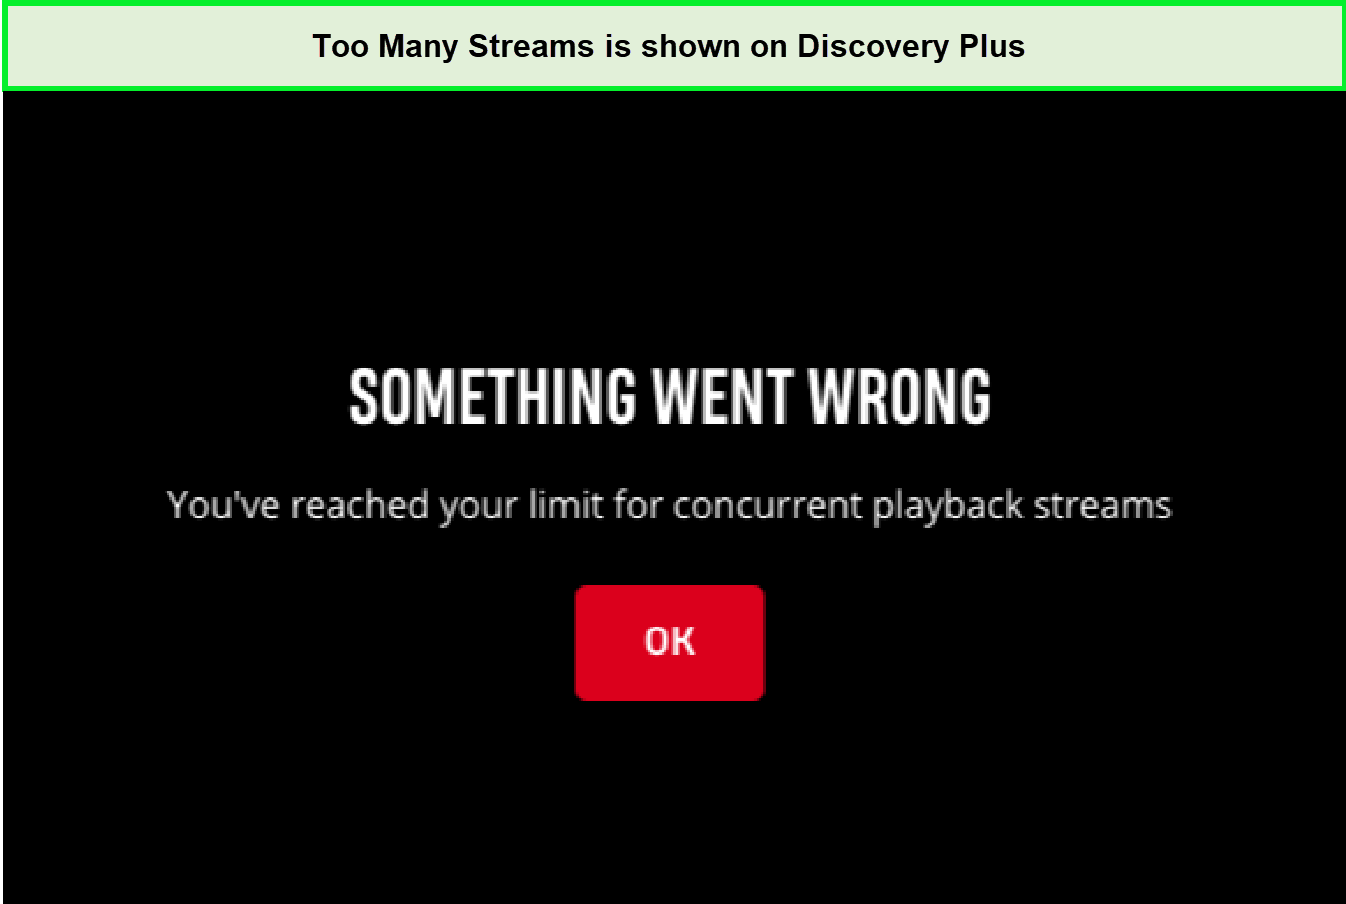 discovery-plus-too-many-streams-error-outside-USA